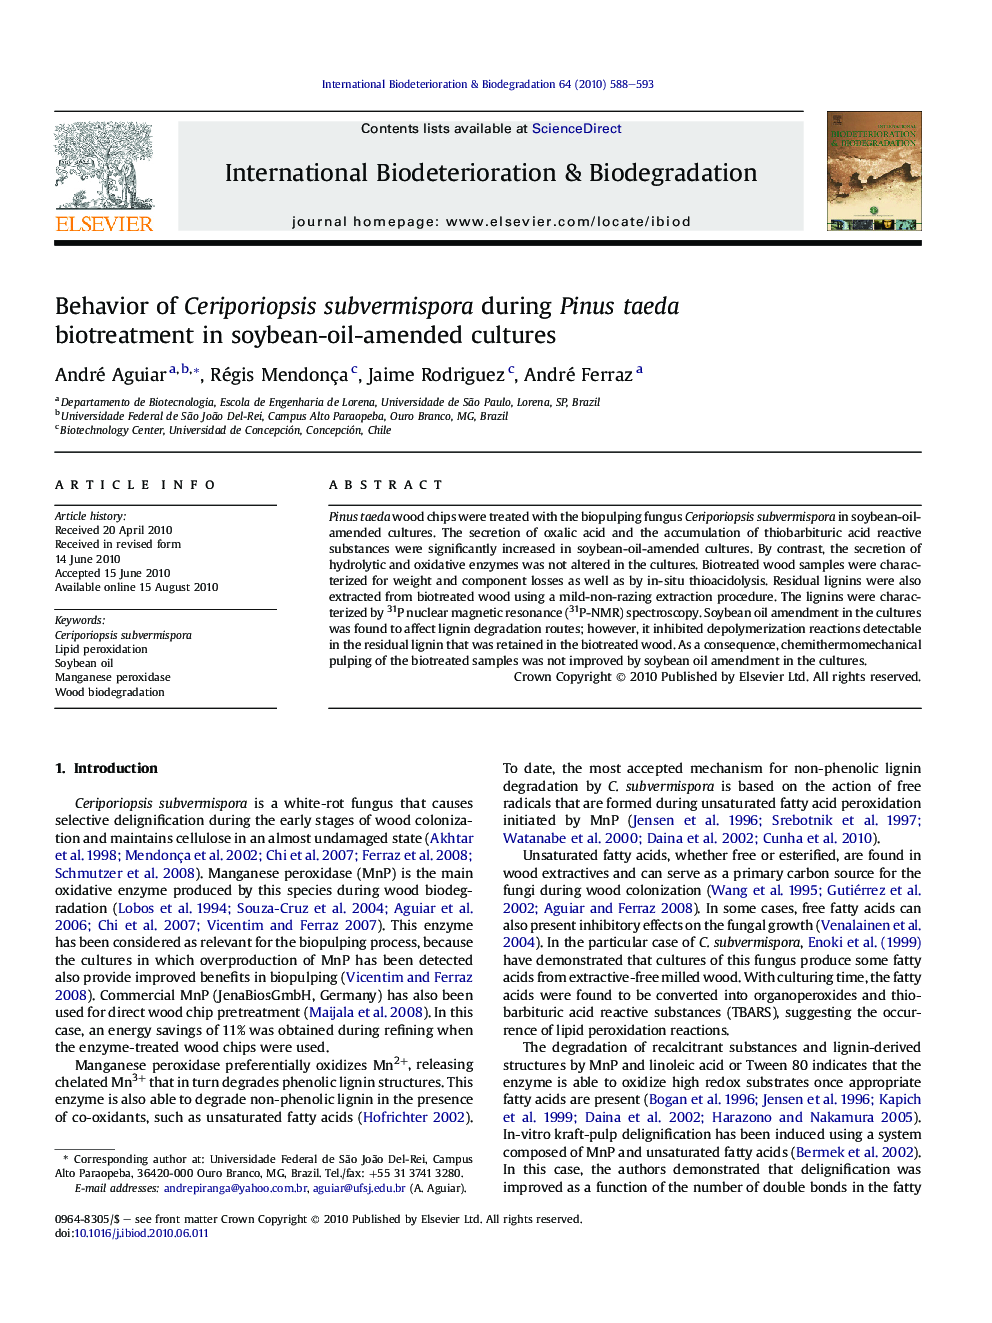 Behavior of Ceriporiopsis subvermispora during Pinus taeda biotreatment in soybean-oil-amended cultures